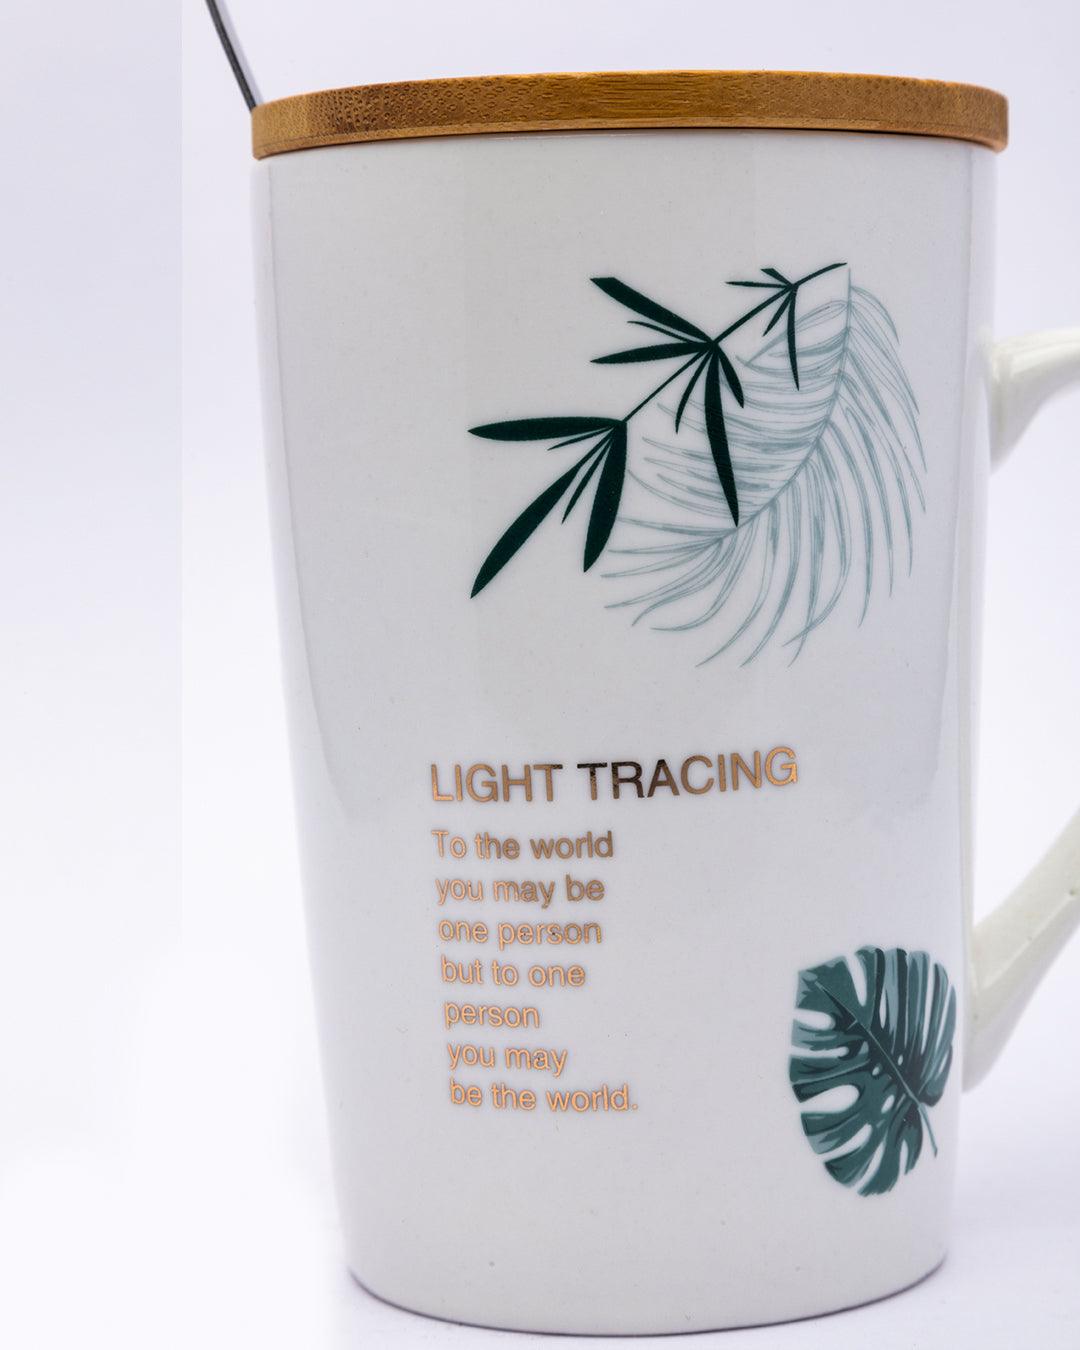 Mug with Lid & Spoon, Tea & Coffee Mug, Botanical Print, White, Ceramic, 360 mL - MARKET 99